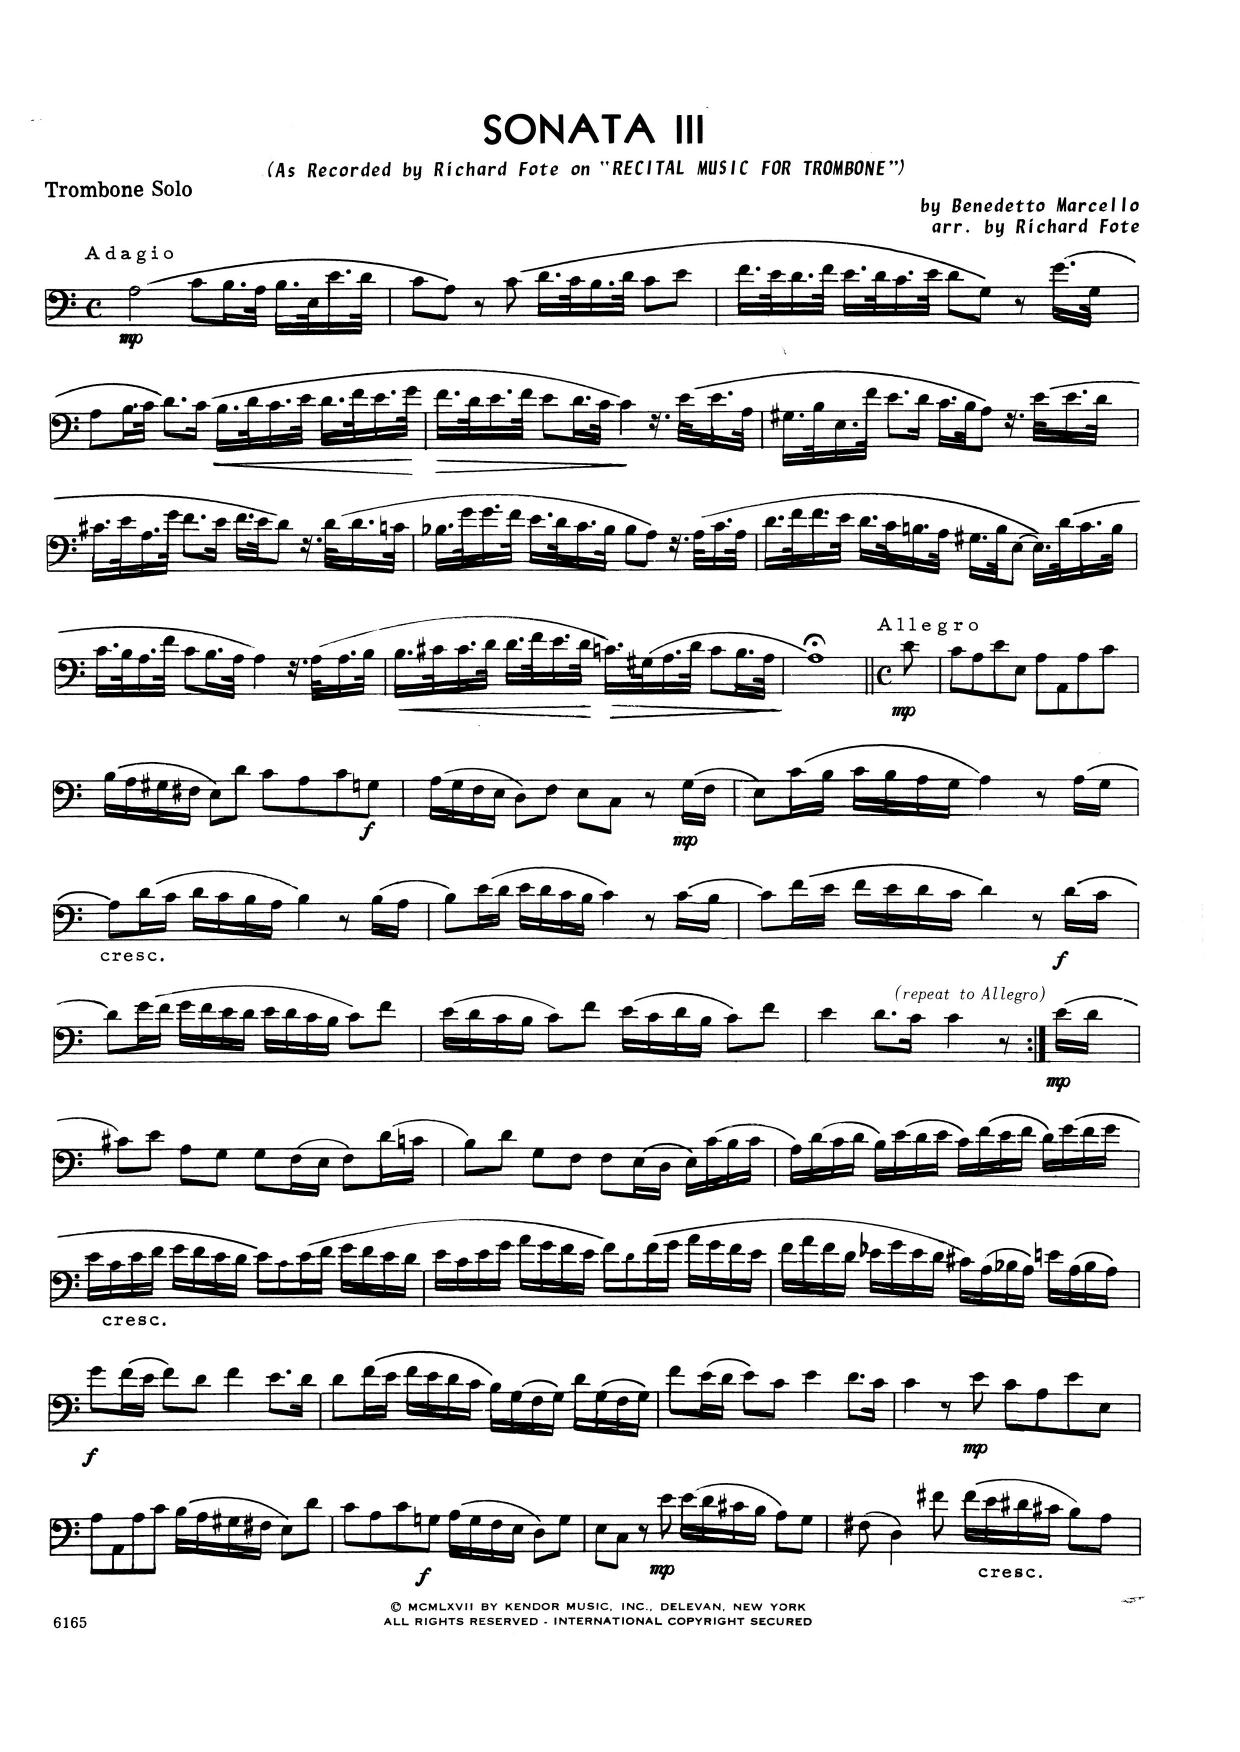 Download Richard Fote Sonata Iii - Trombone Sheet Music